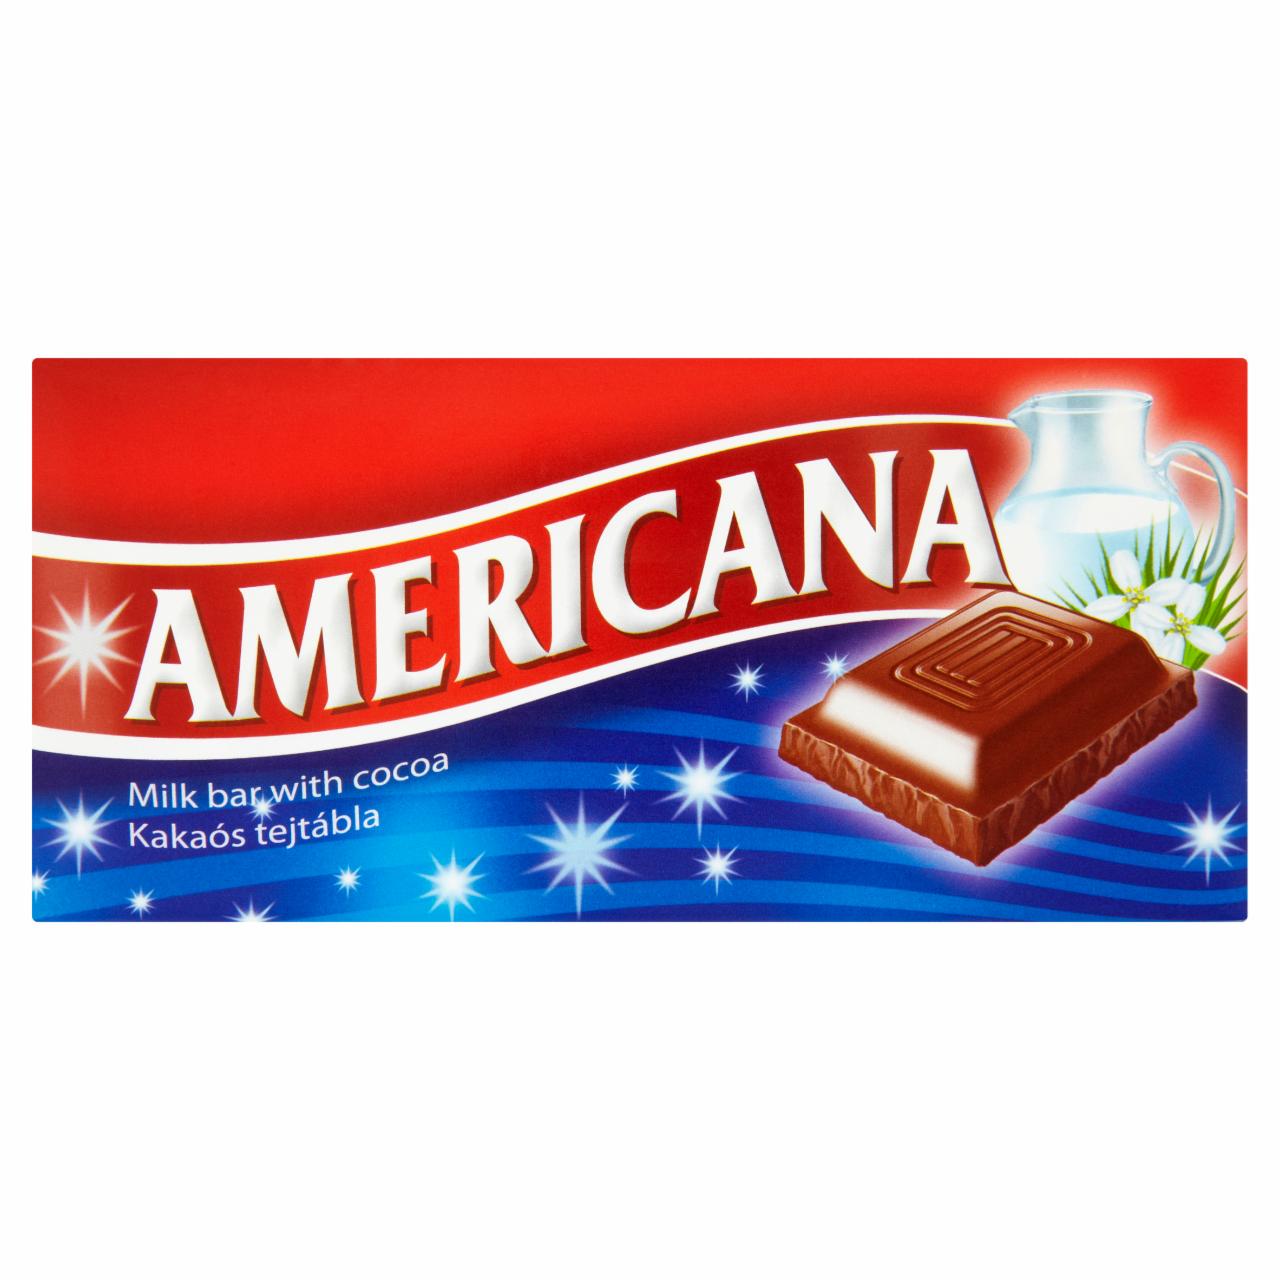 Képek - Americana kakaós tejtábla 100 g